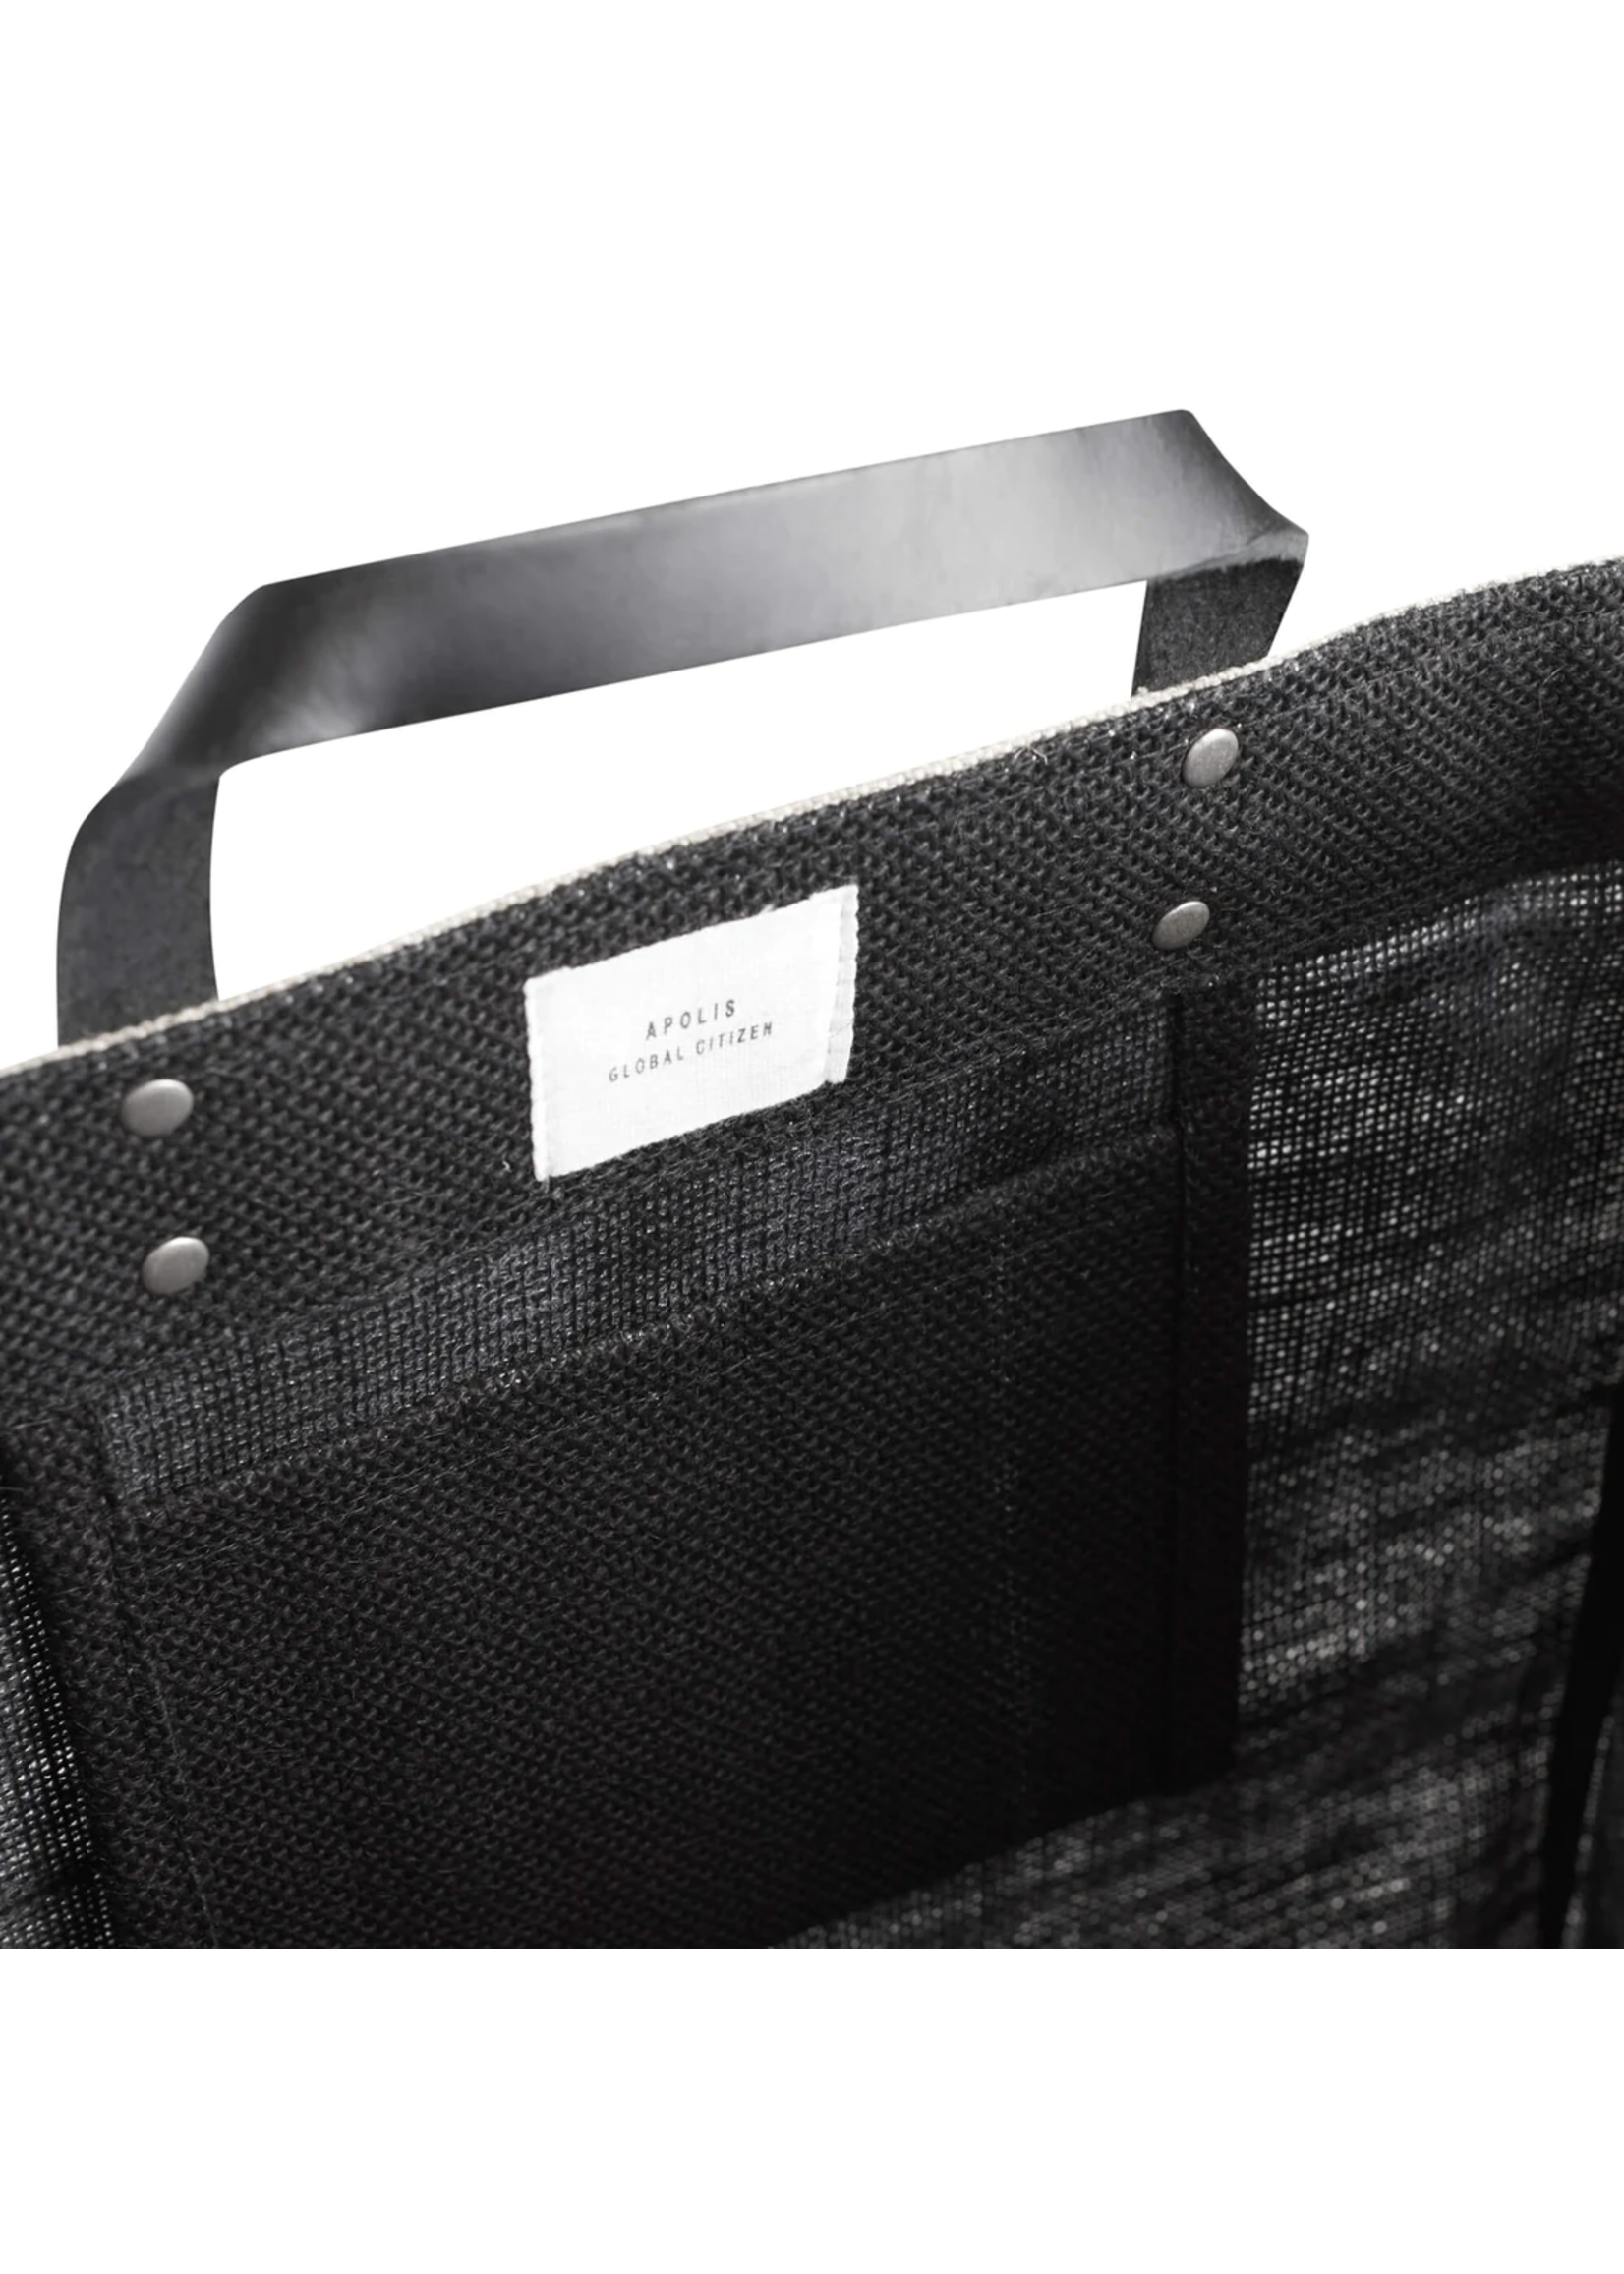 Apolis Market Bag in Black w/ Leather Strap